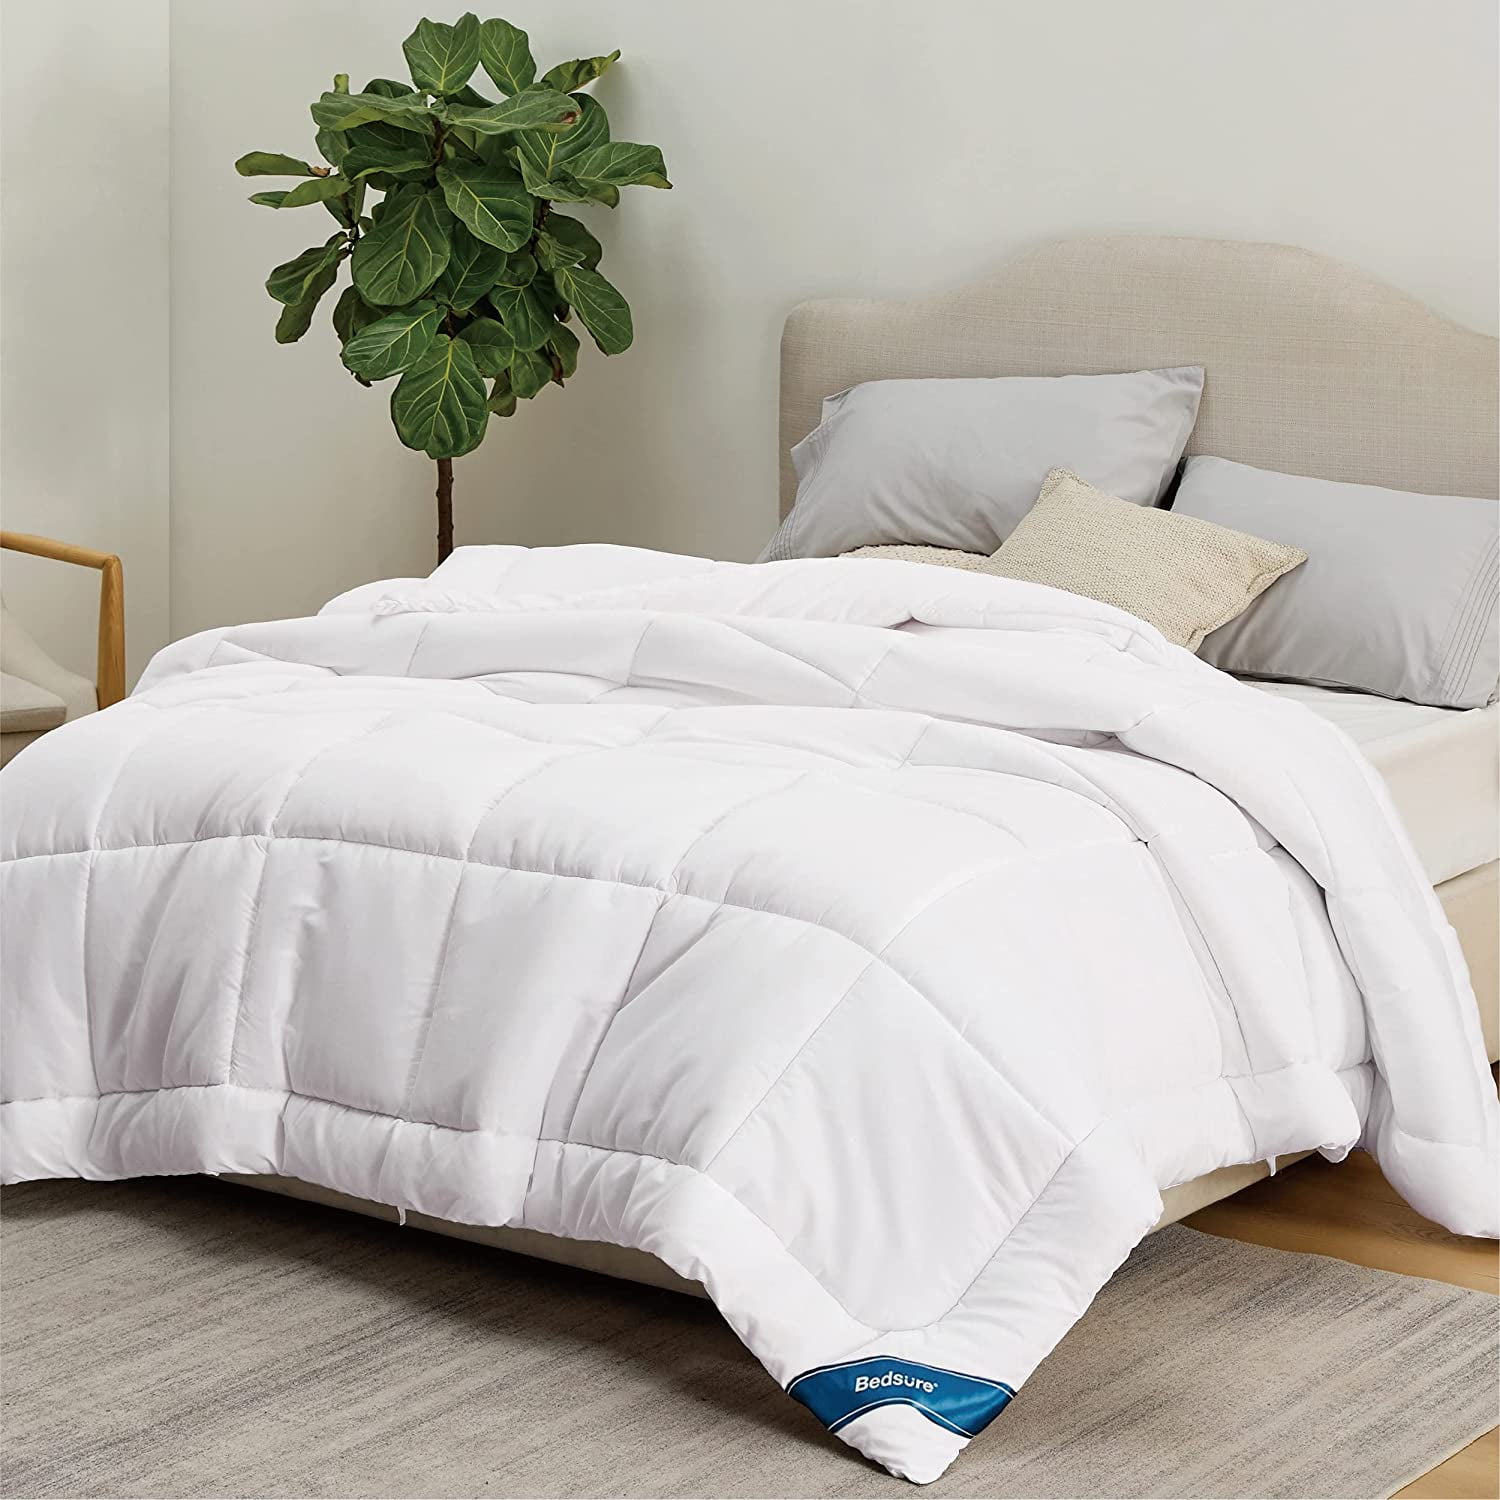 Bedsure All Season Down Alternative Comforter Duvet Insert, Machine  Washable Quilted Reversible Duvet Insert with Corner Tabs, White, Full  Size, 82x86